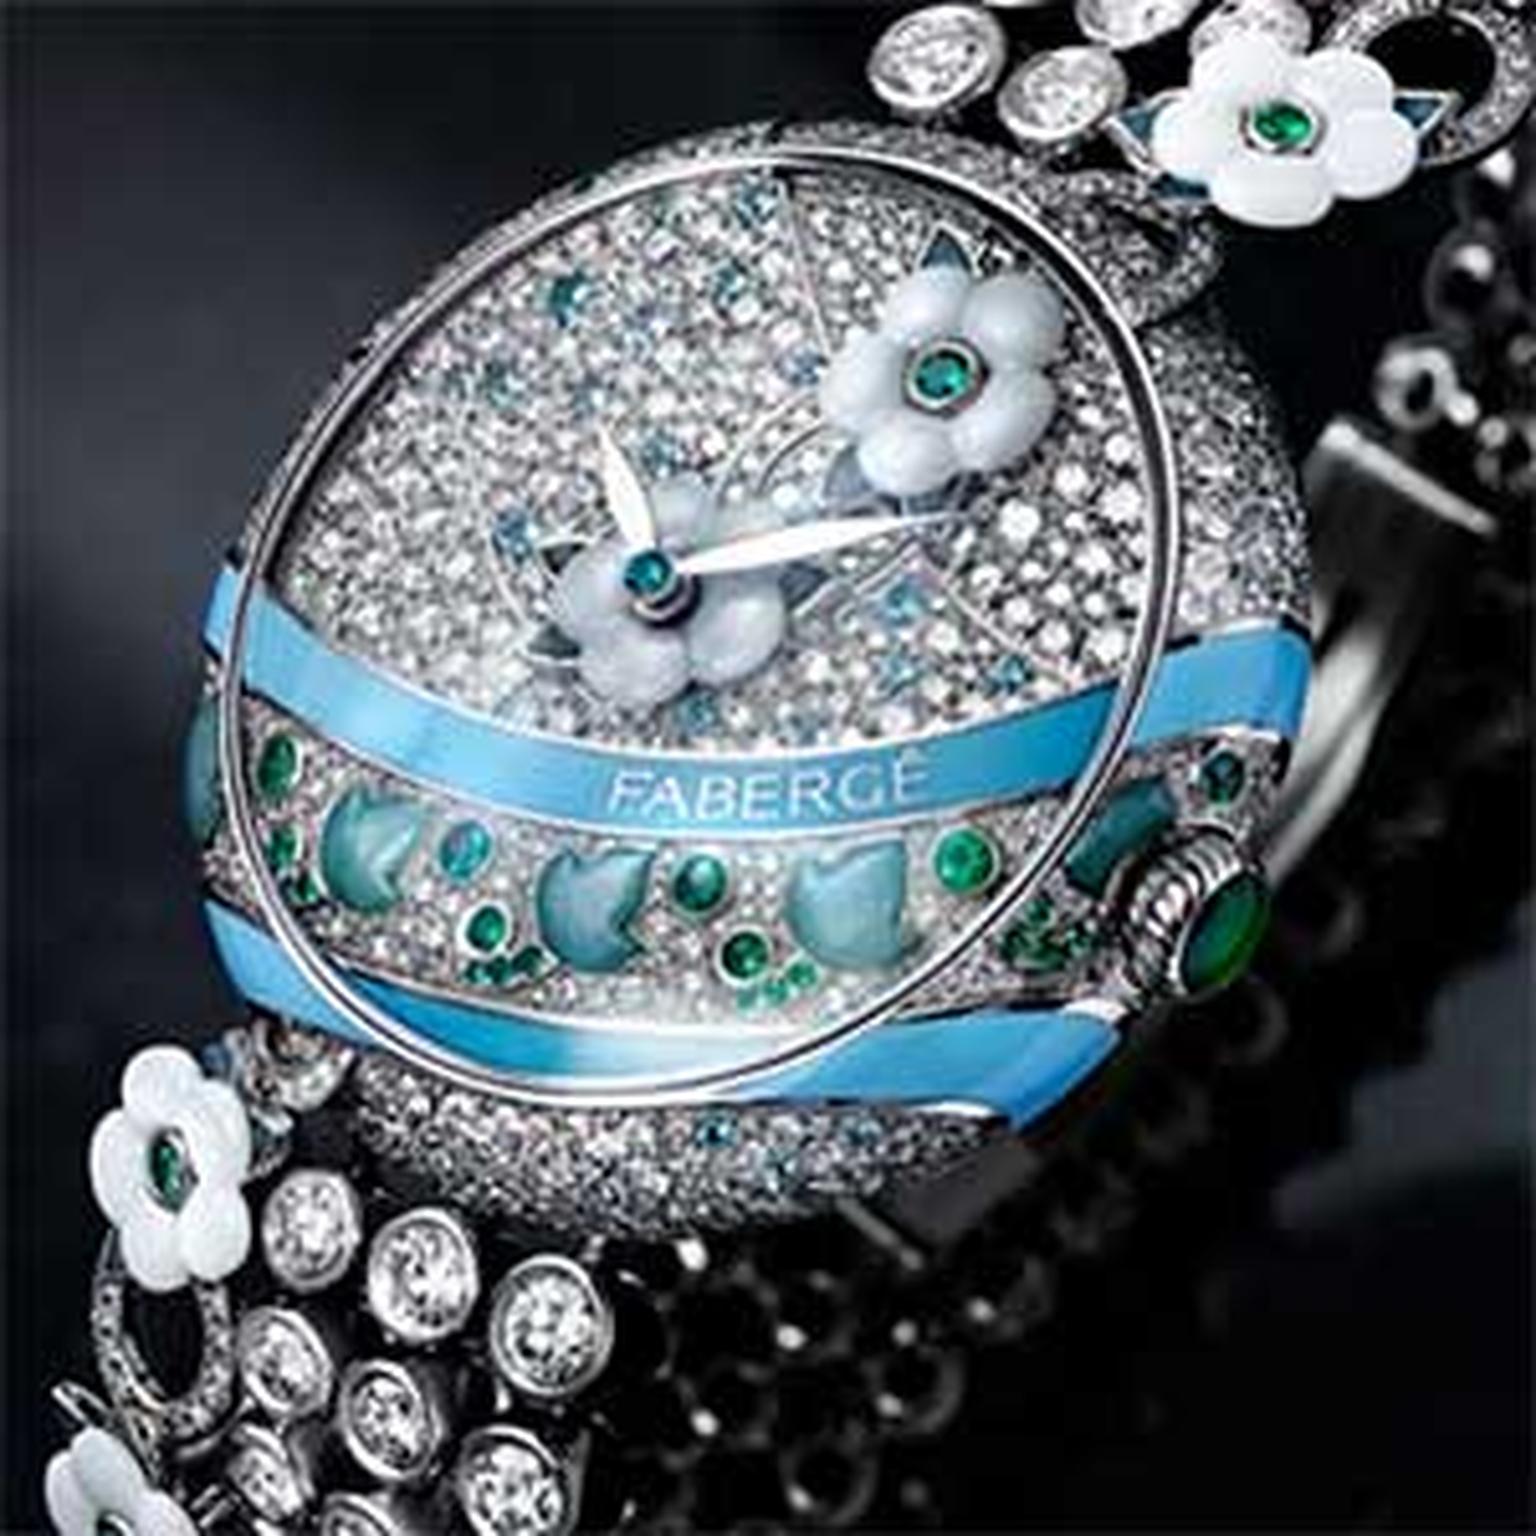 Faberge -watch